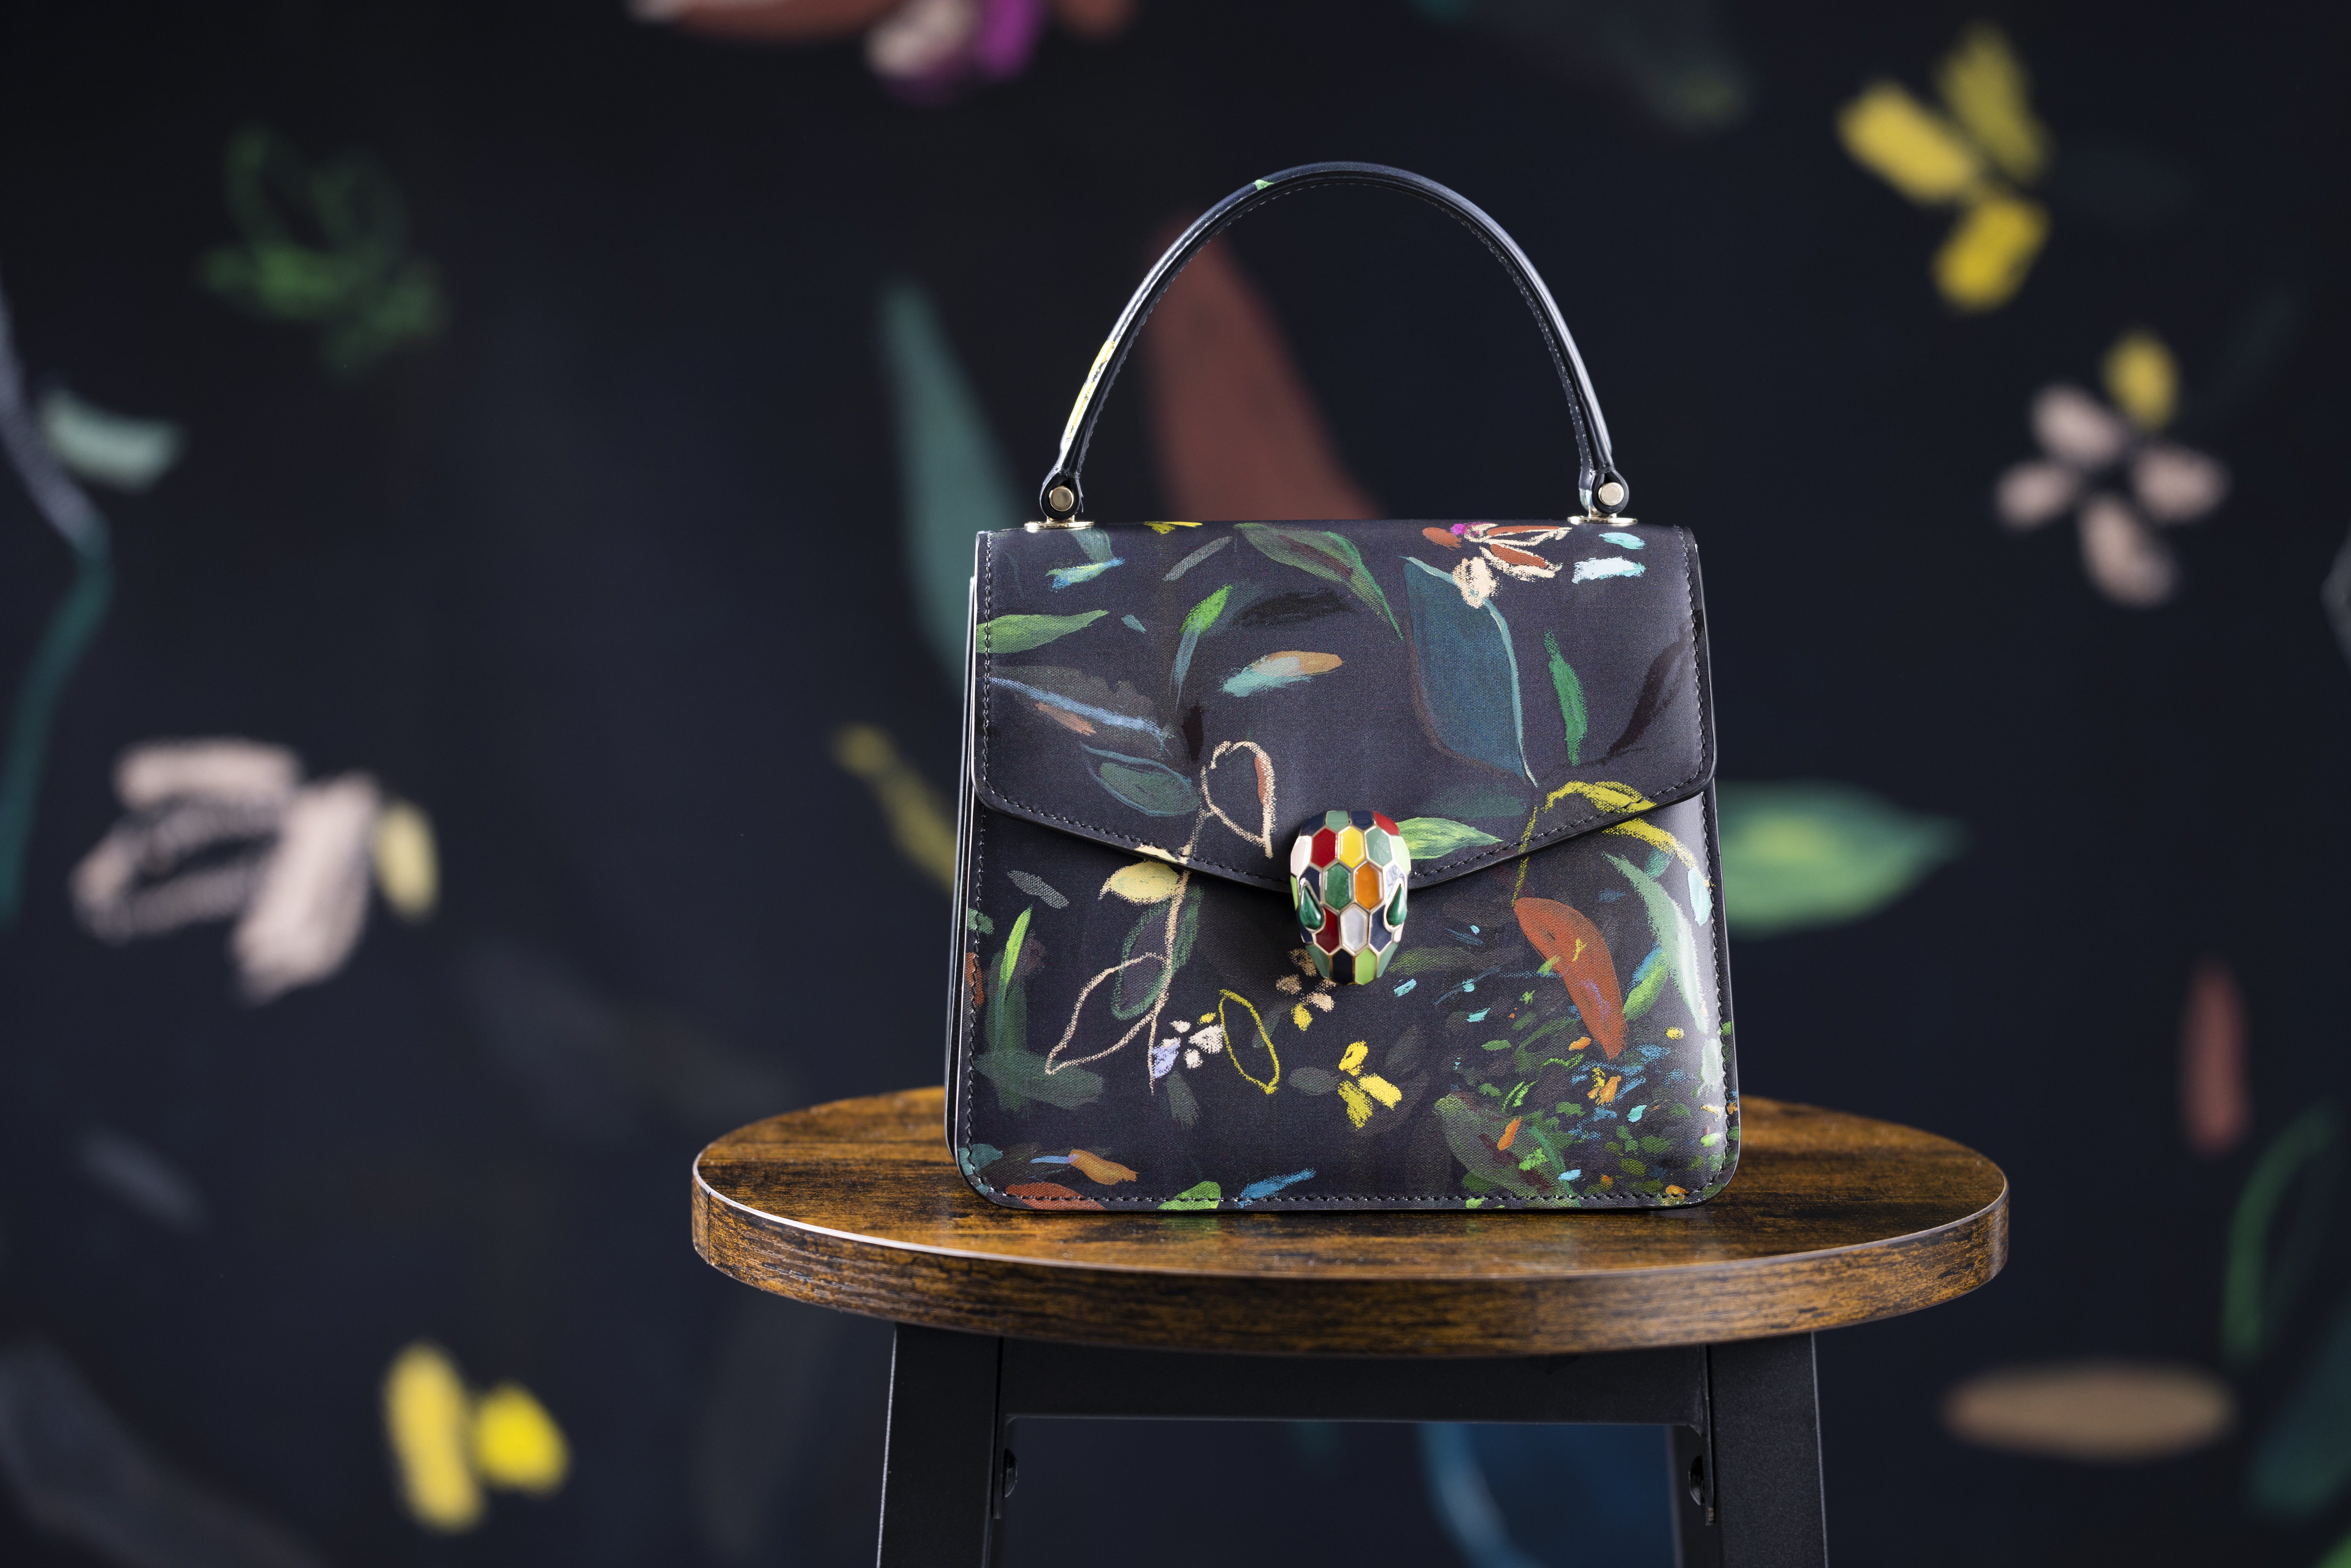 Louis Vuitton Iconic Speedy Motif Multicolor Enamel Bag Charm